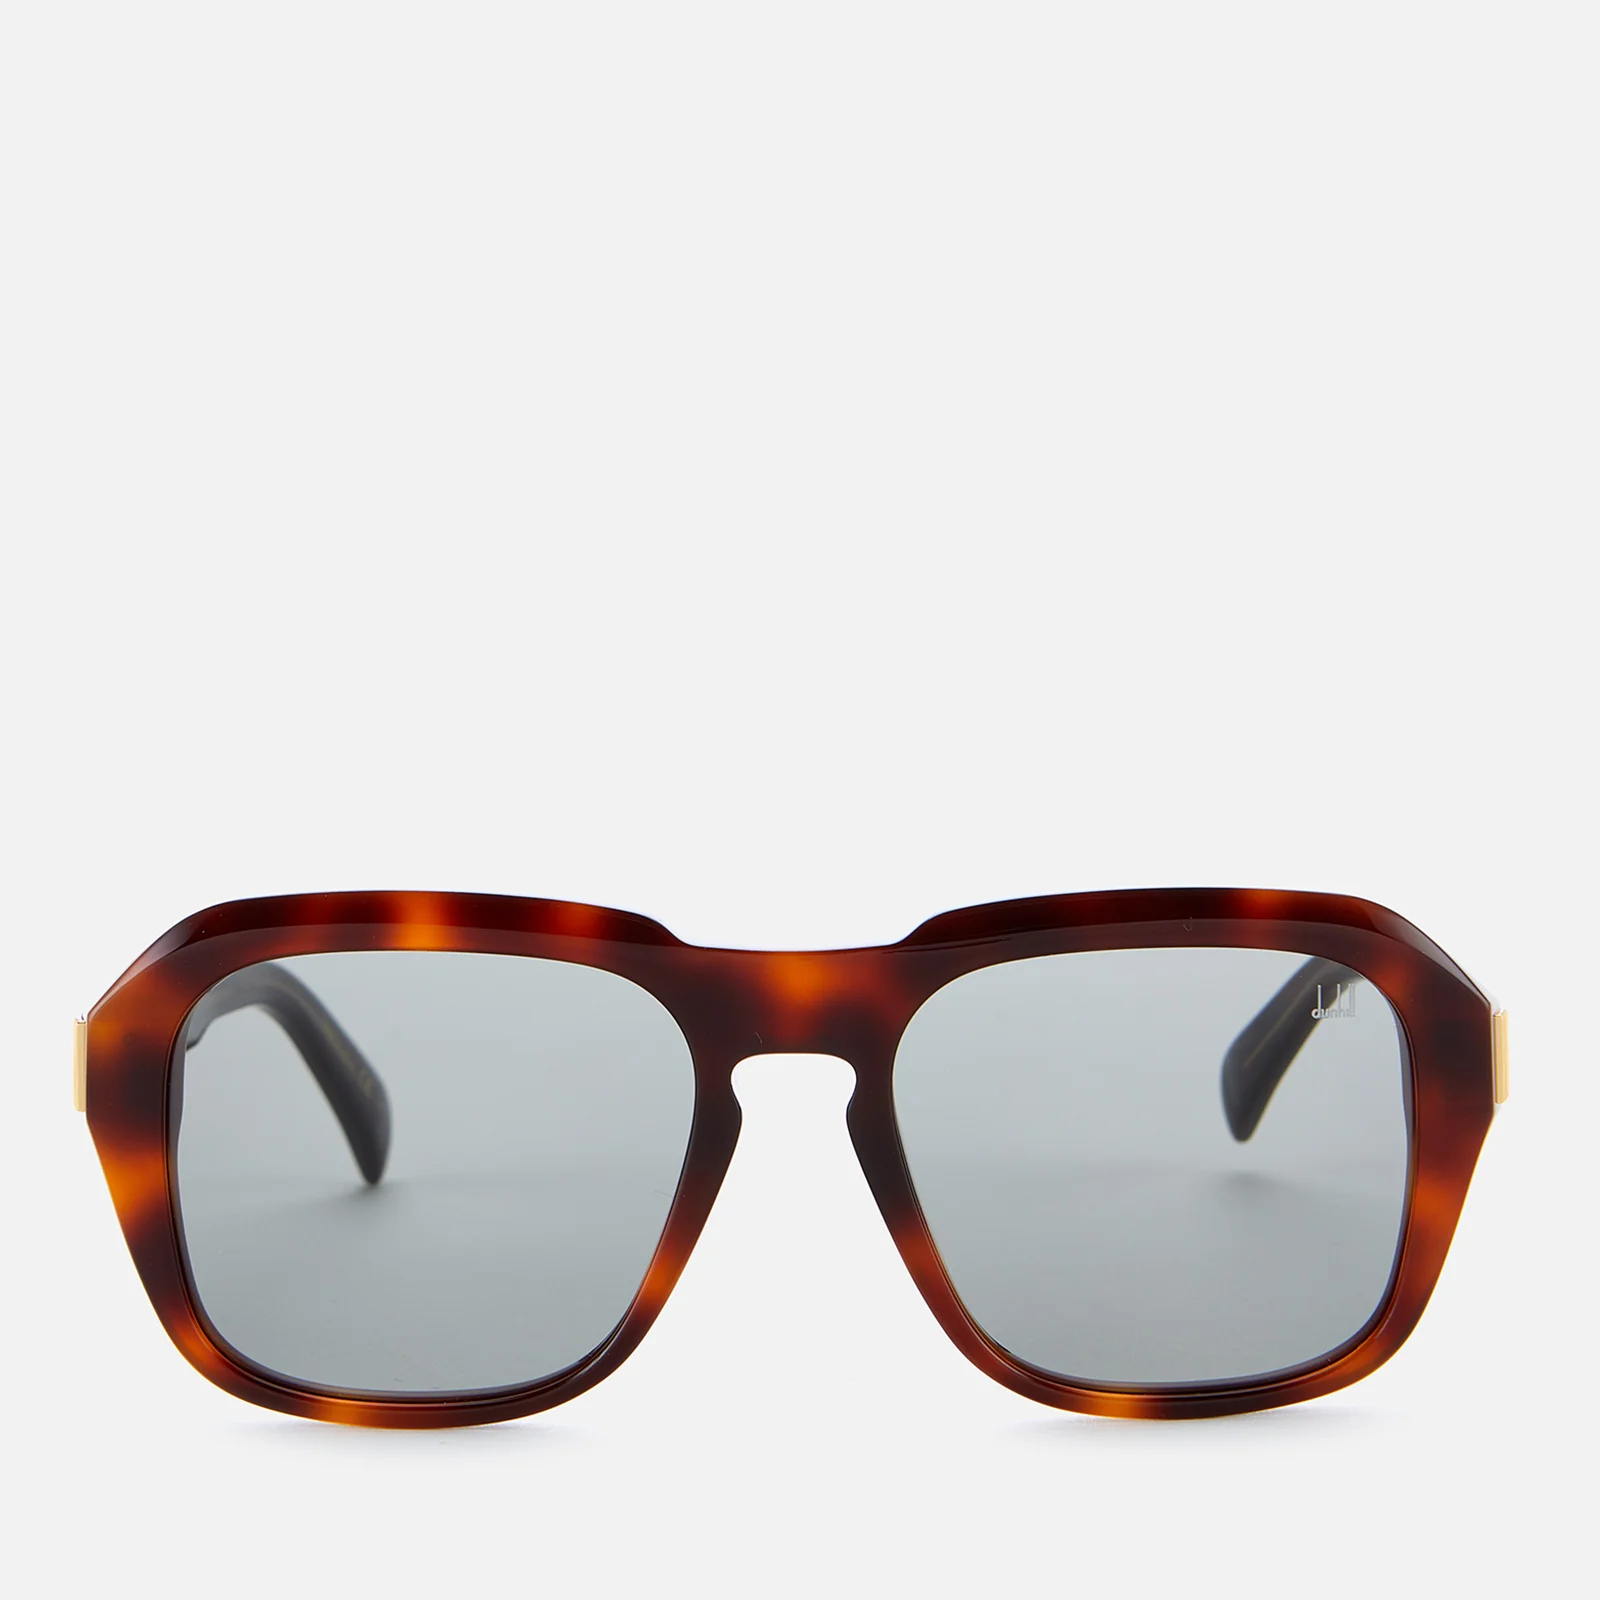 Dunhill Men's Square Acetate Sunglasses - Havana/Grey Image 1